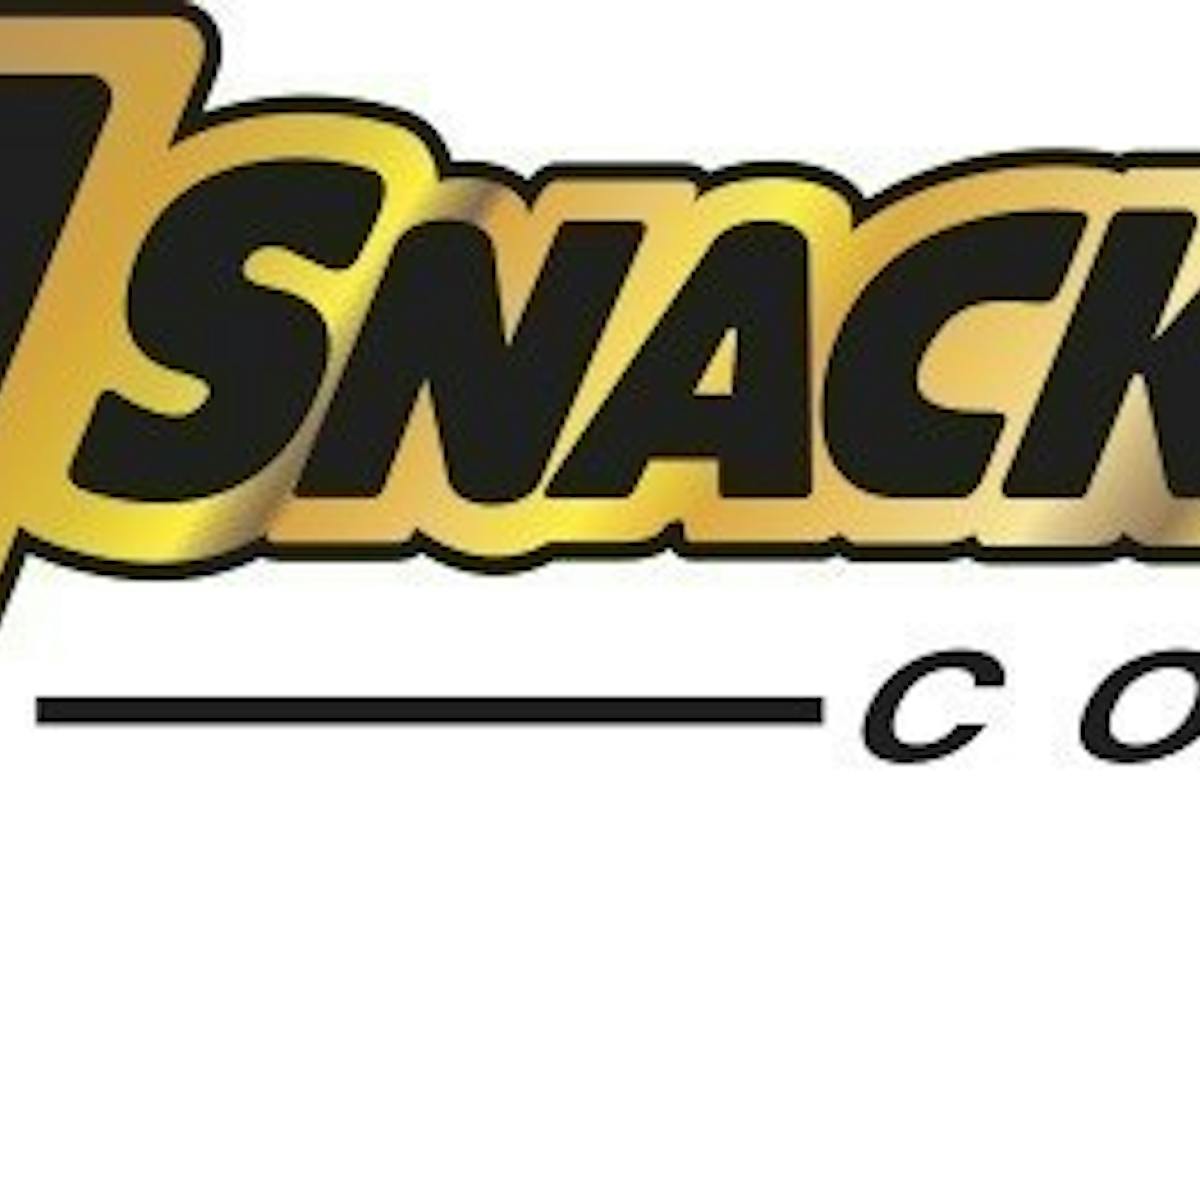 J&amp;j Snack Foods Logo